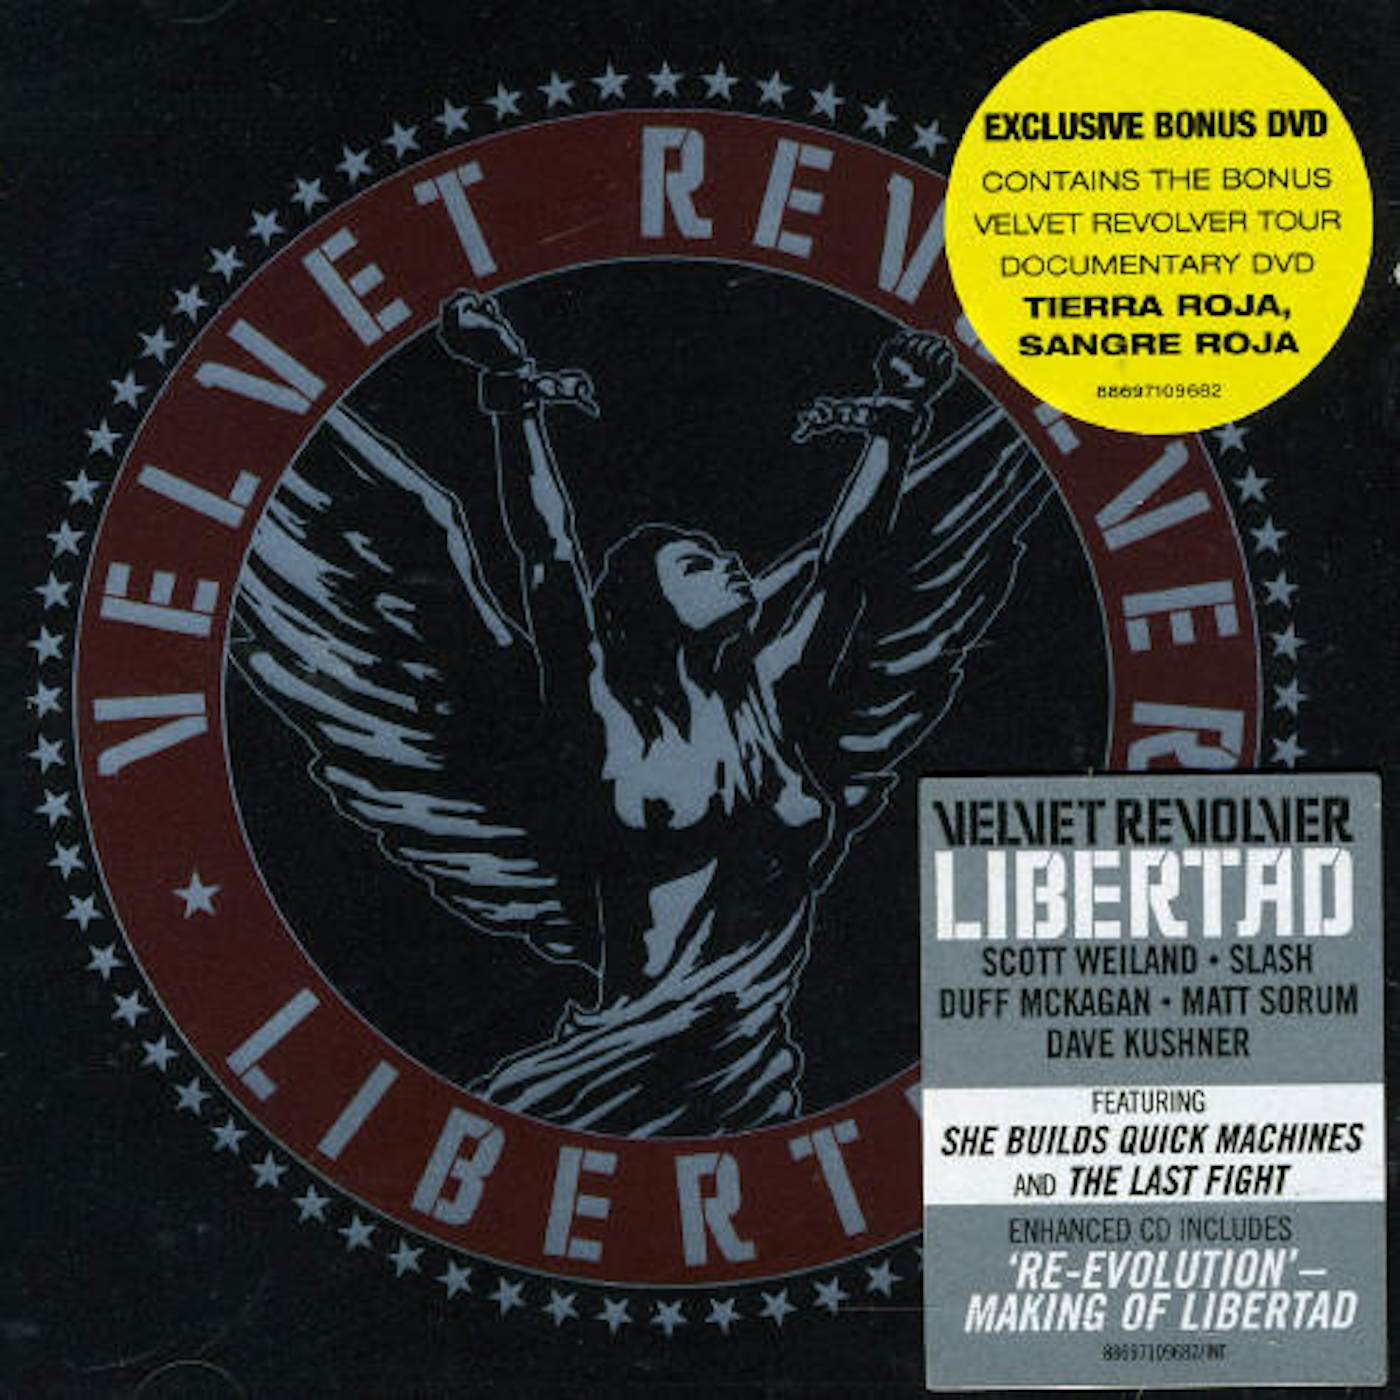 Velvet Revolver LIBERTAD CD